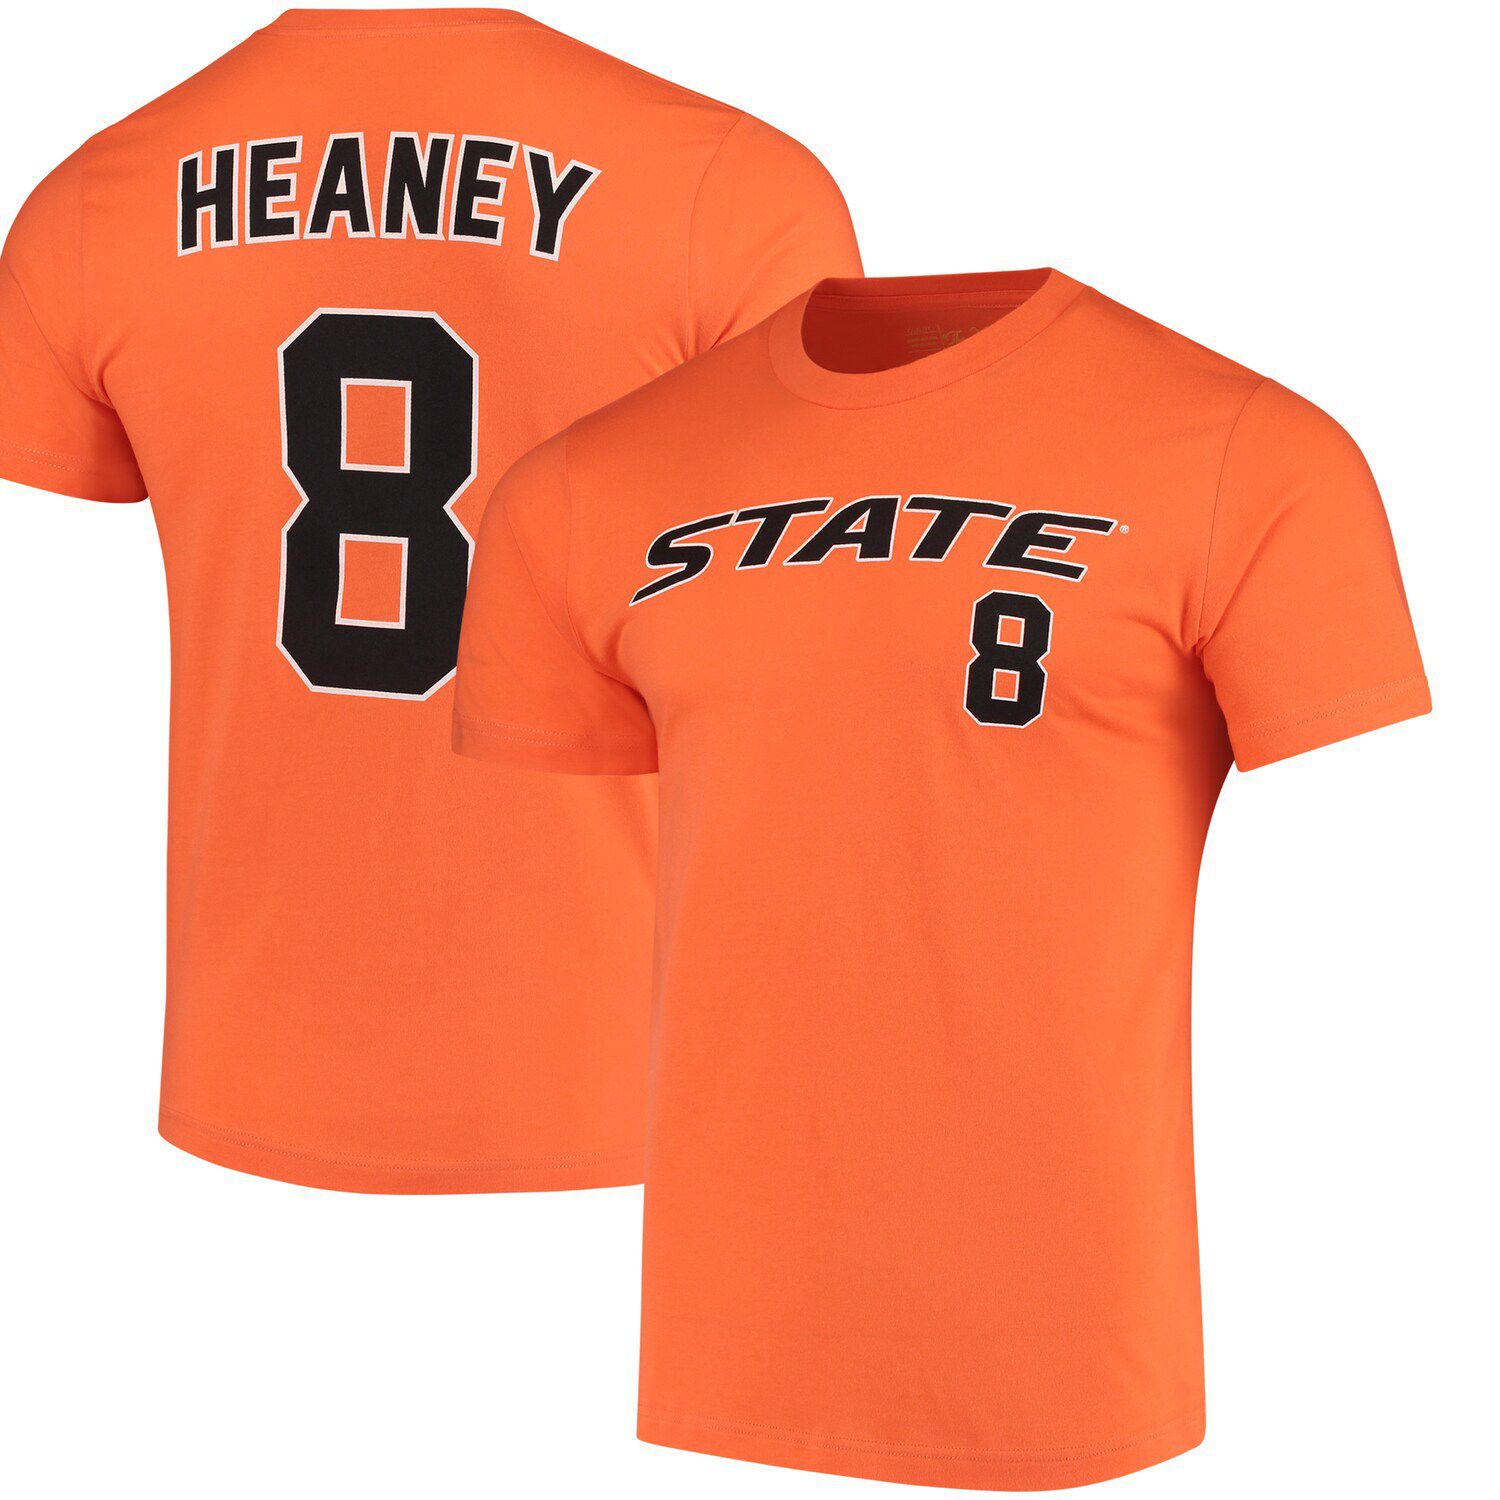 Image for Unbranded Men's Original Retro Brand Andrew Heaney Orange Oklahoma State Cowboys Baseball Name & Number T-Shirt at Kohl's.